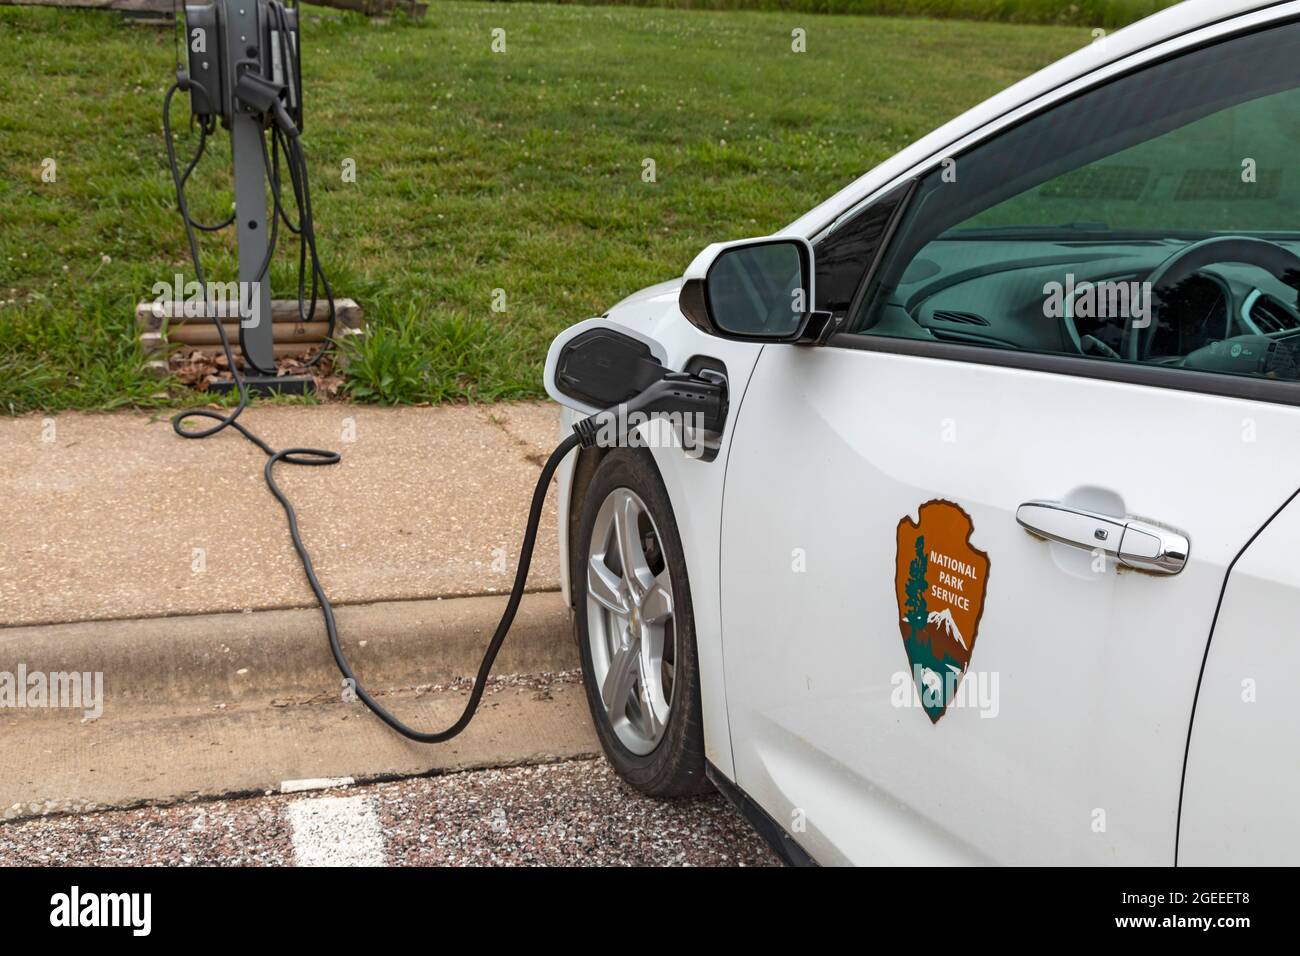 Republic, Missouri - A National Park Service Chevrolet Volt hybrid electric car charging at Wilson's Creek National Battlefield. Stock Photo